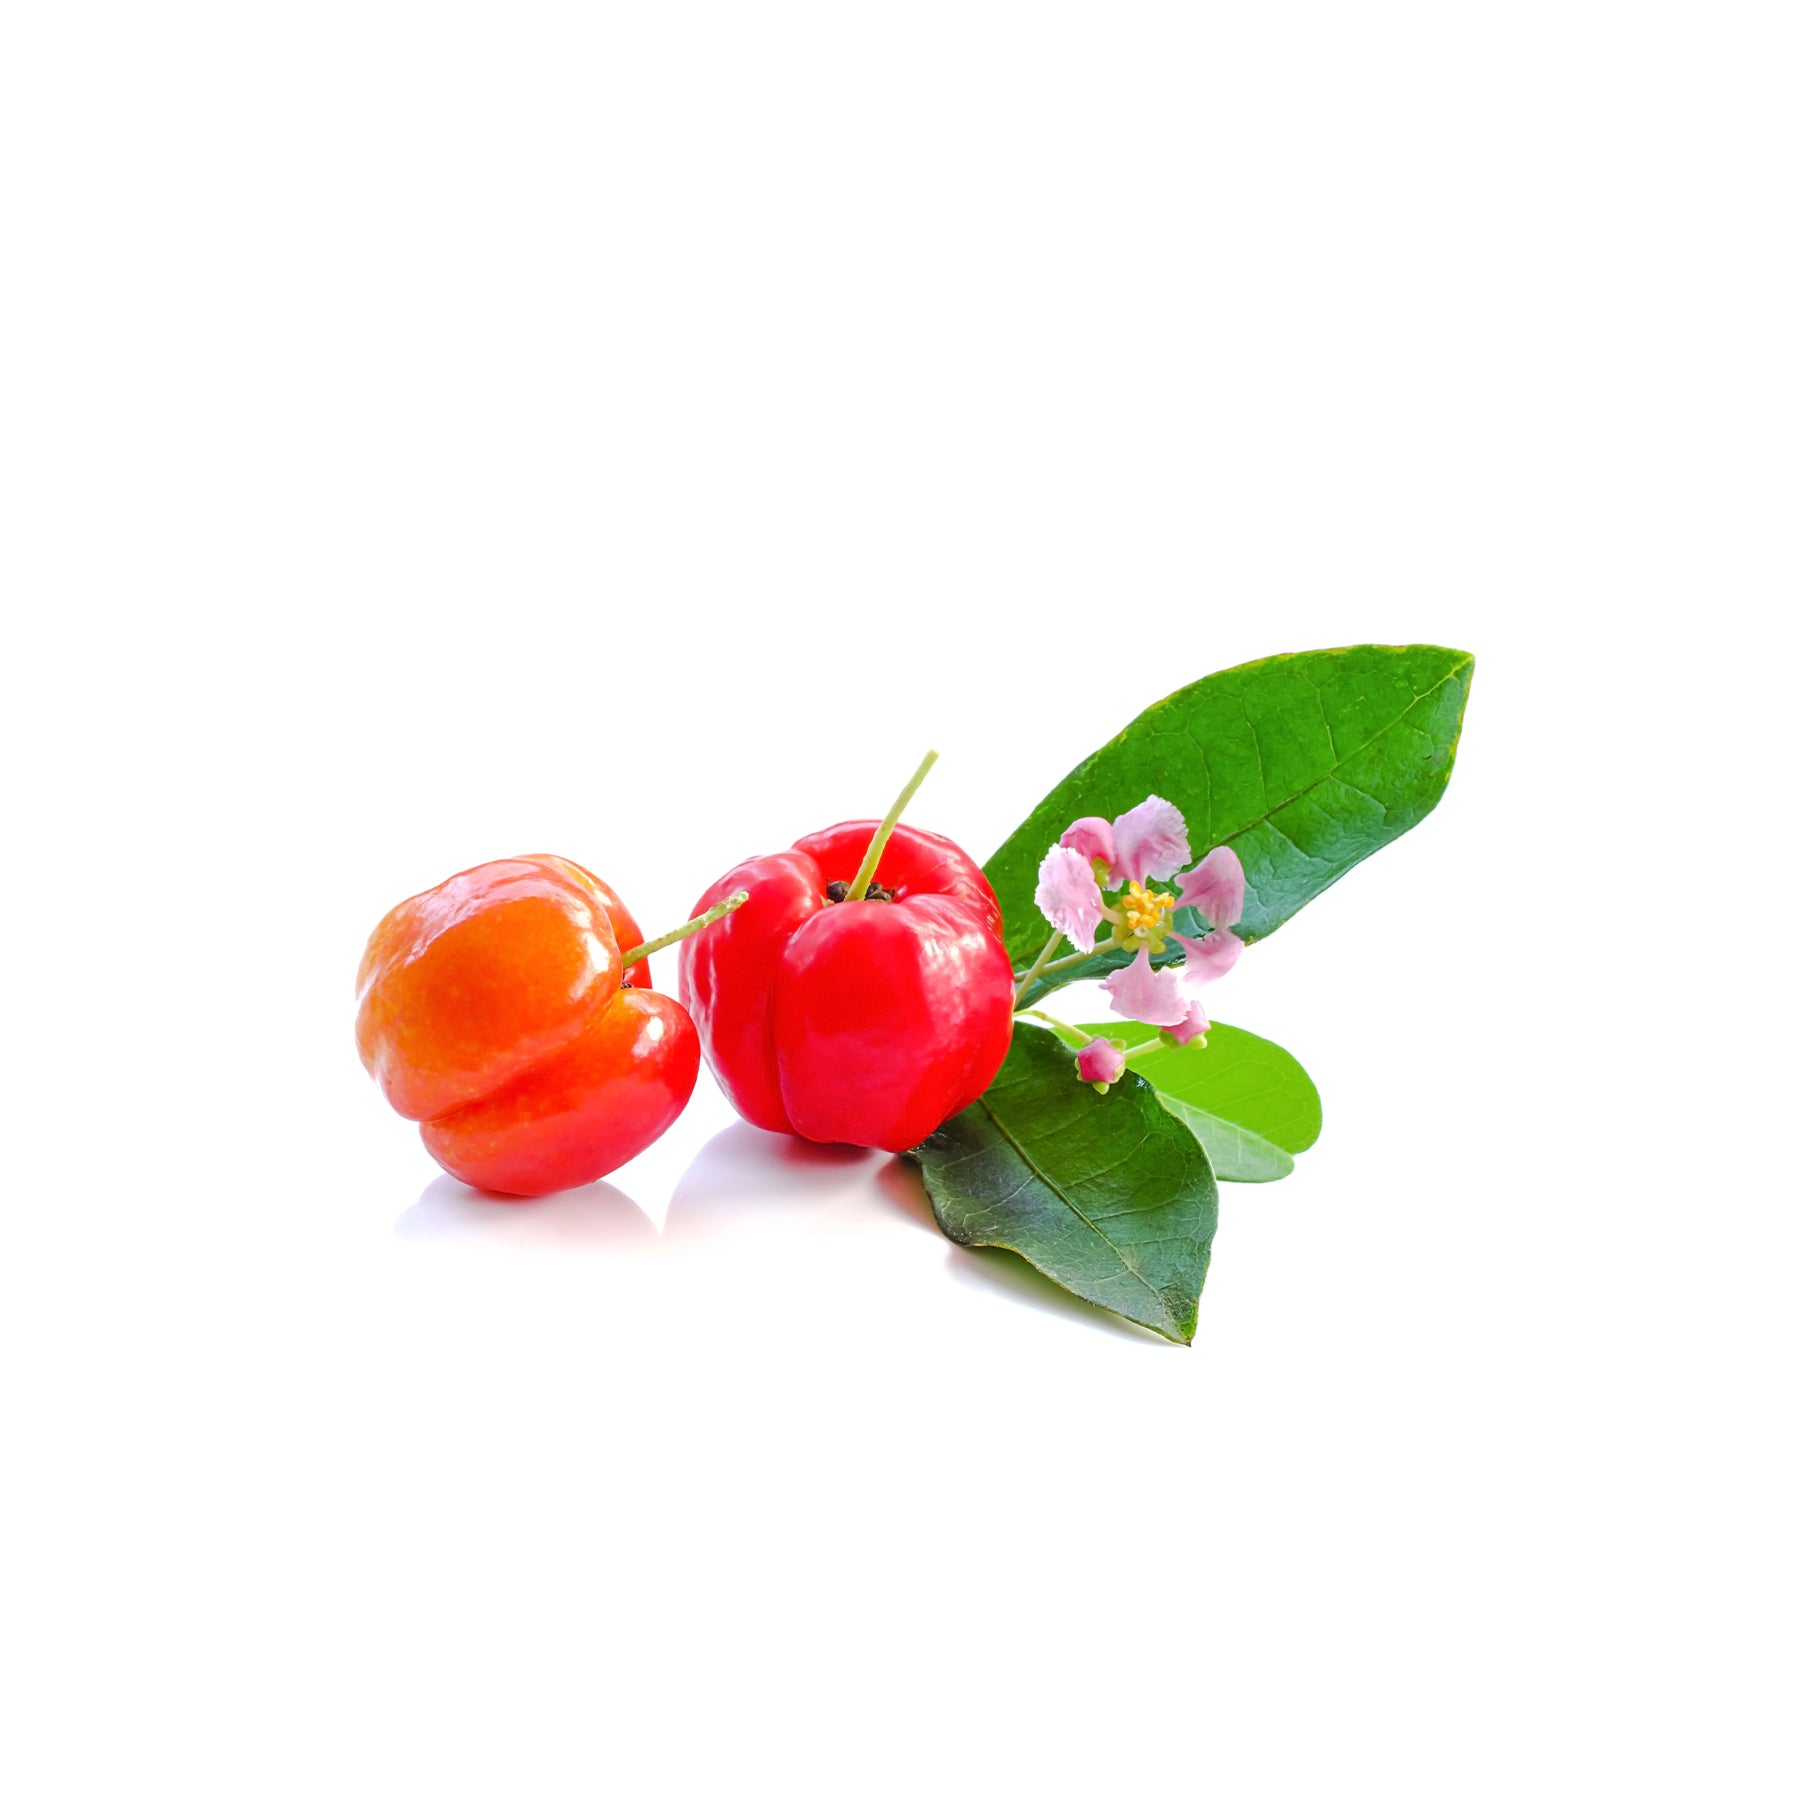 Acerola Cherry Herbal Hair Dye Addition